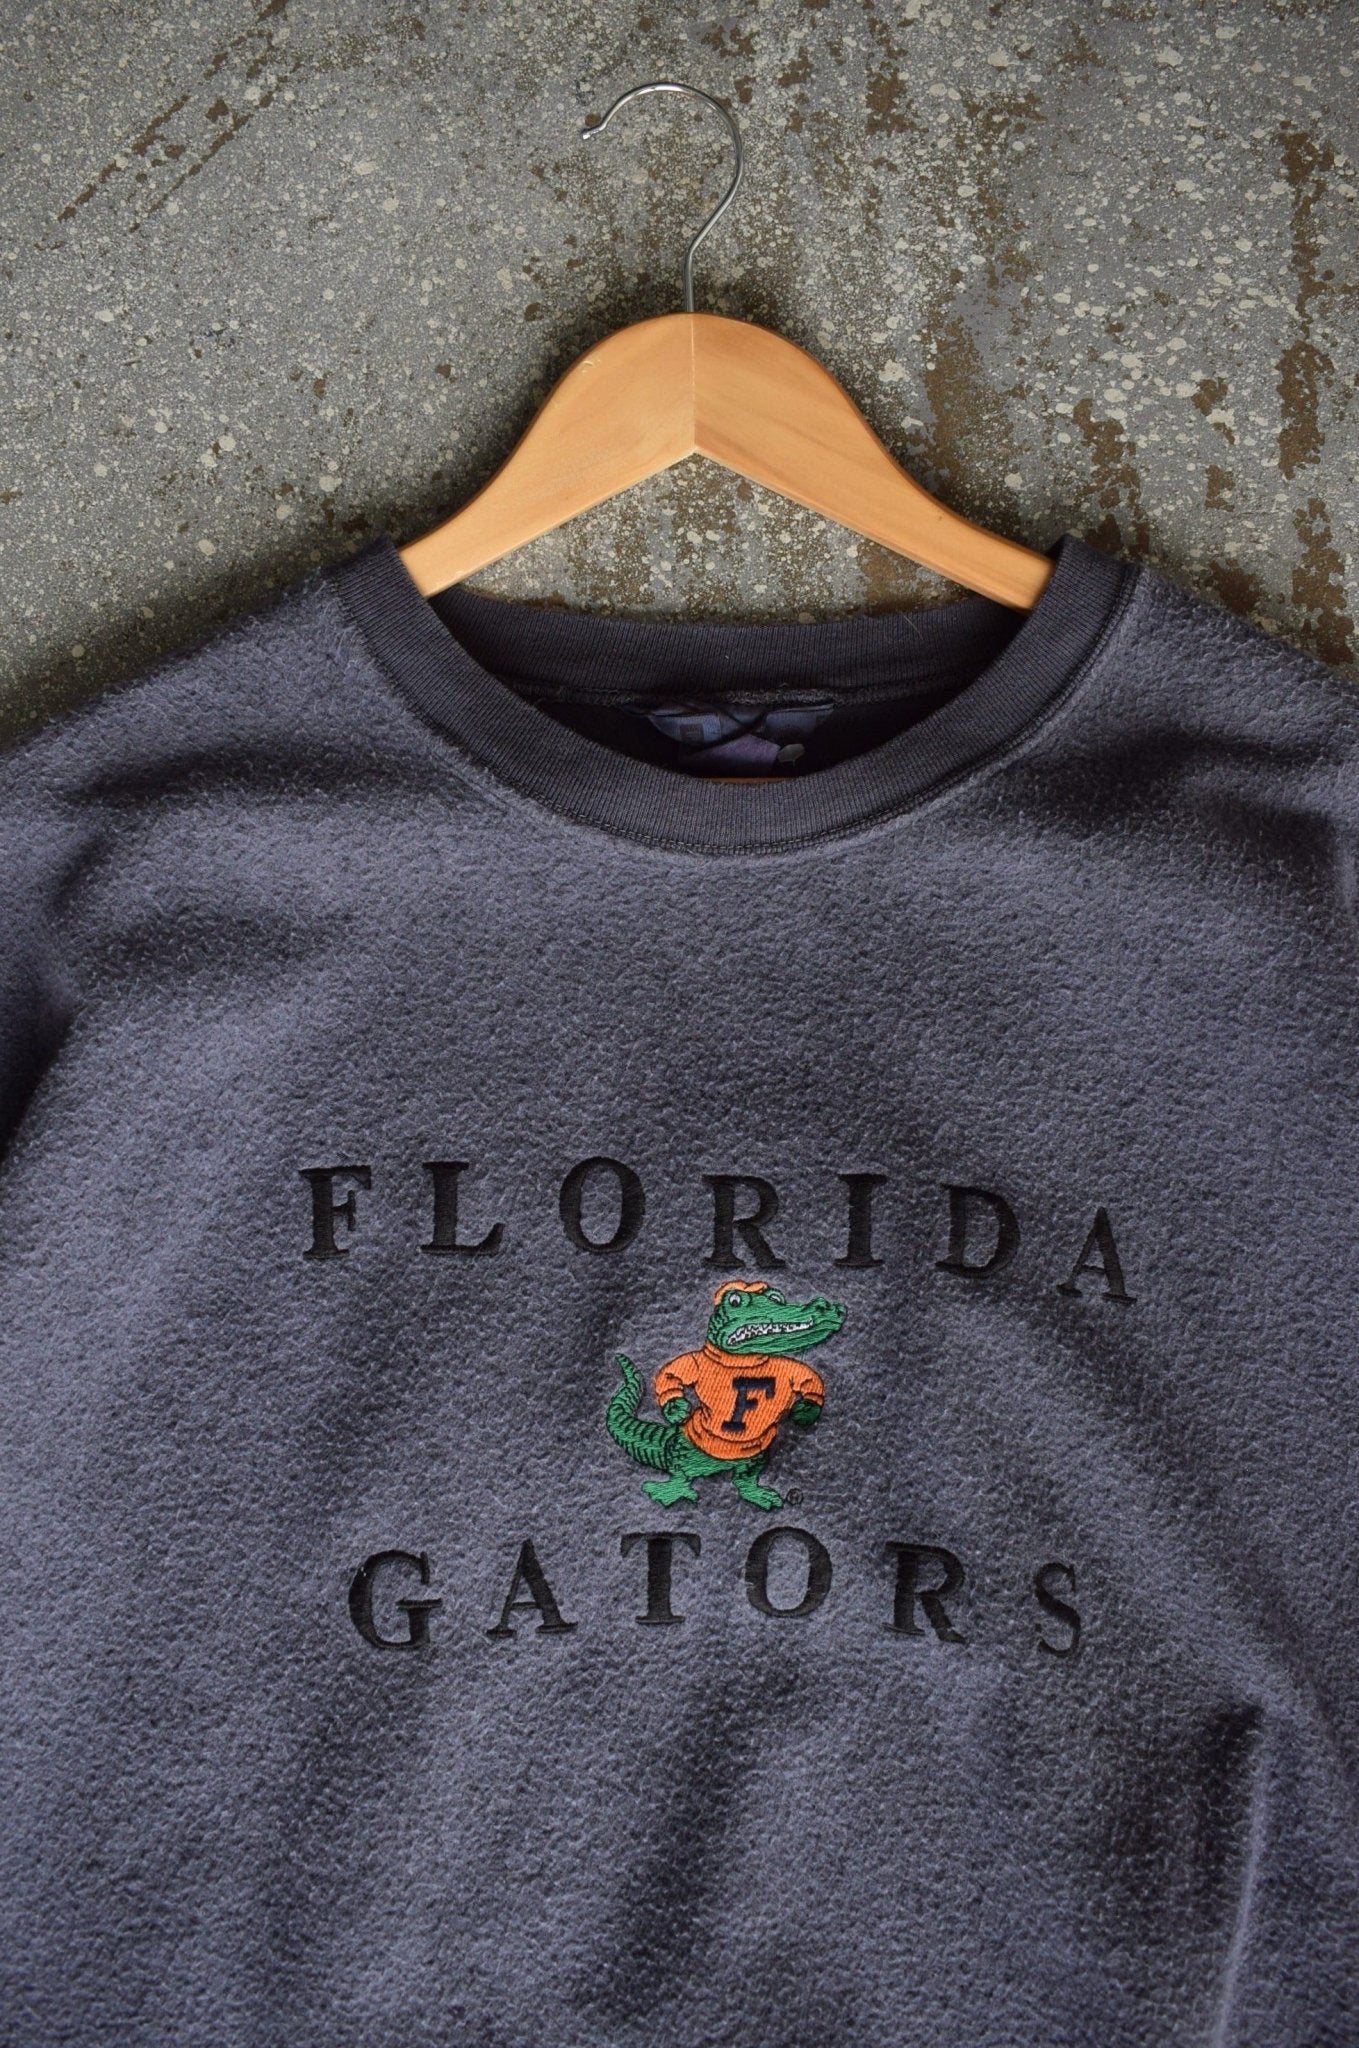 Vintage University of Florida Gators Embroidered Crewneck (L) - Retrospective Store